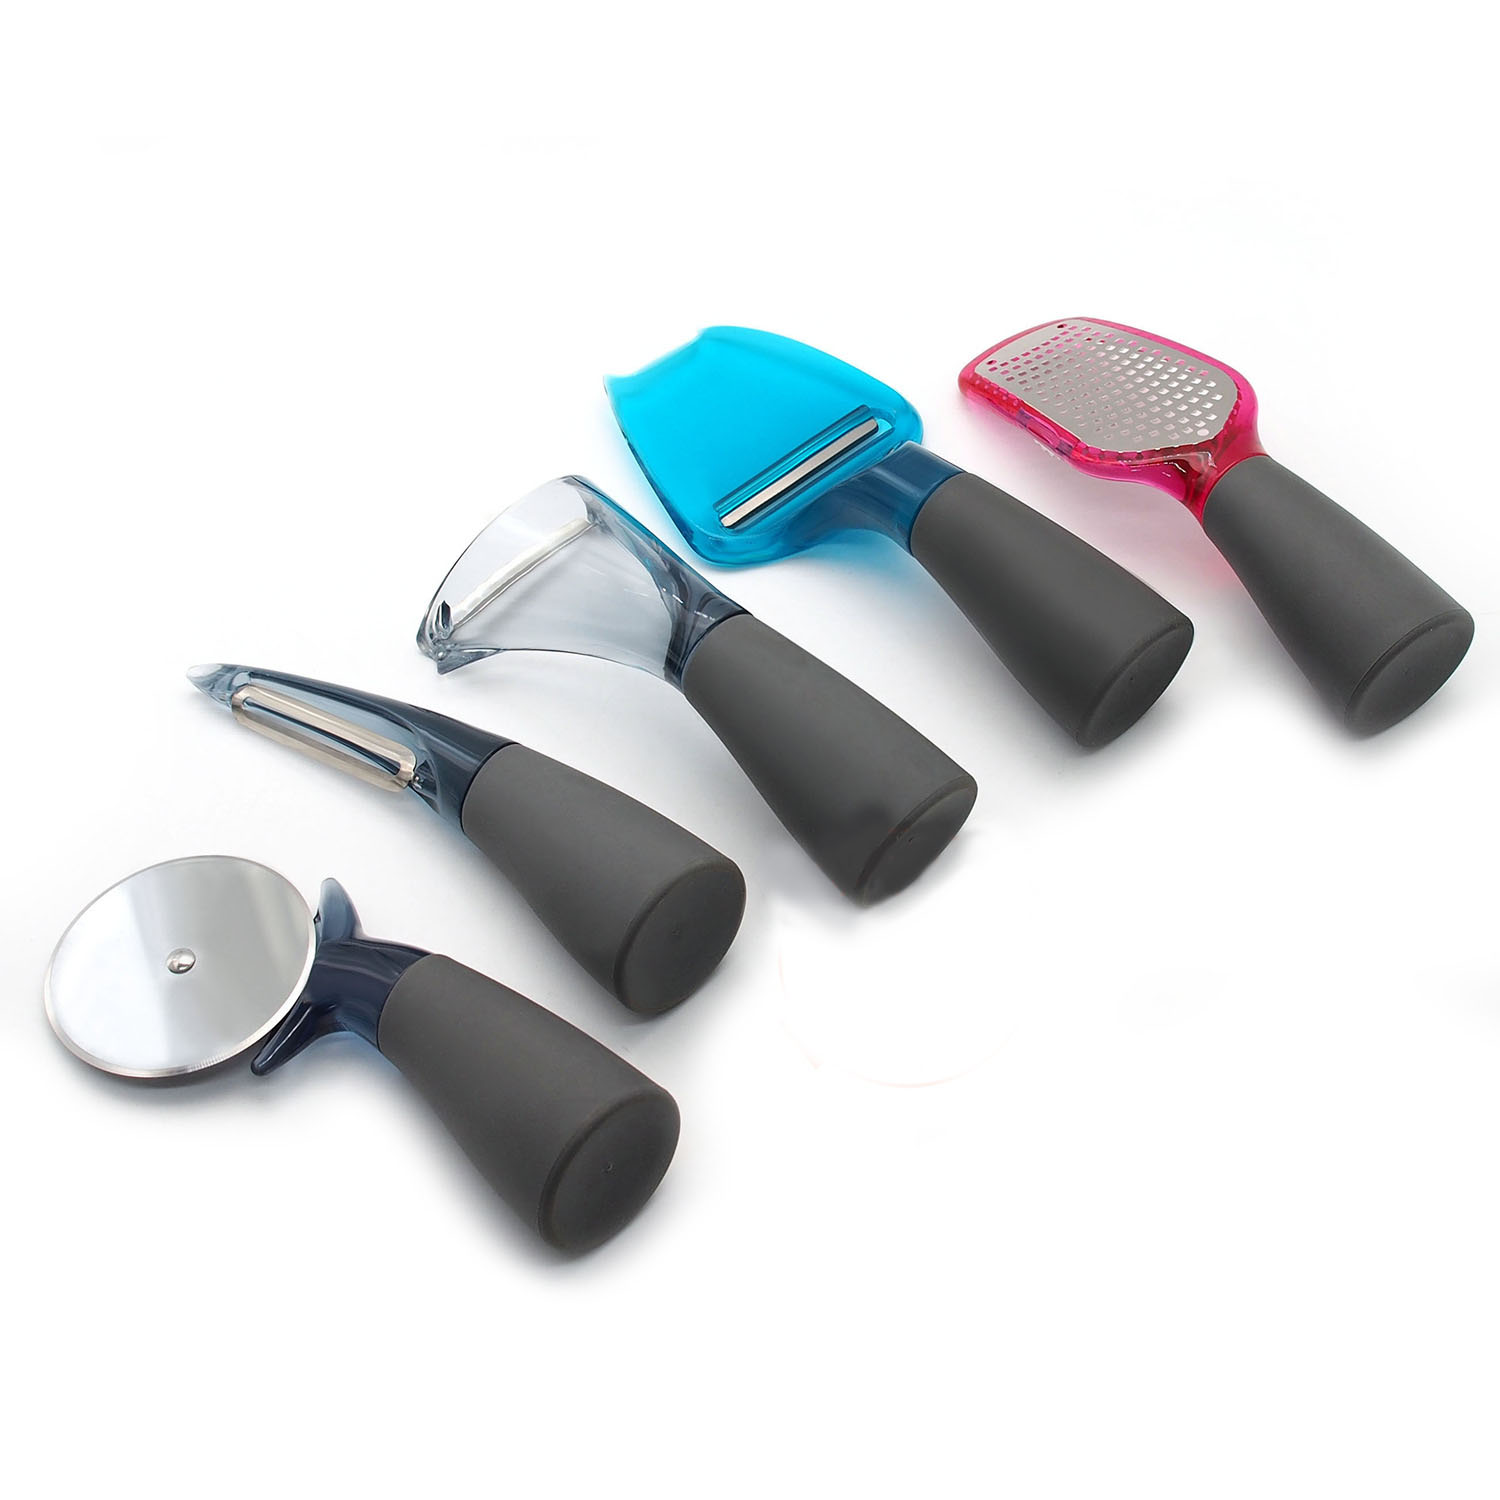 5 pcs kitchen gadget set stainless steel utensils kitchen gadgets with pp handles